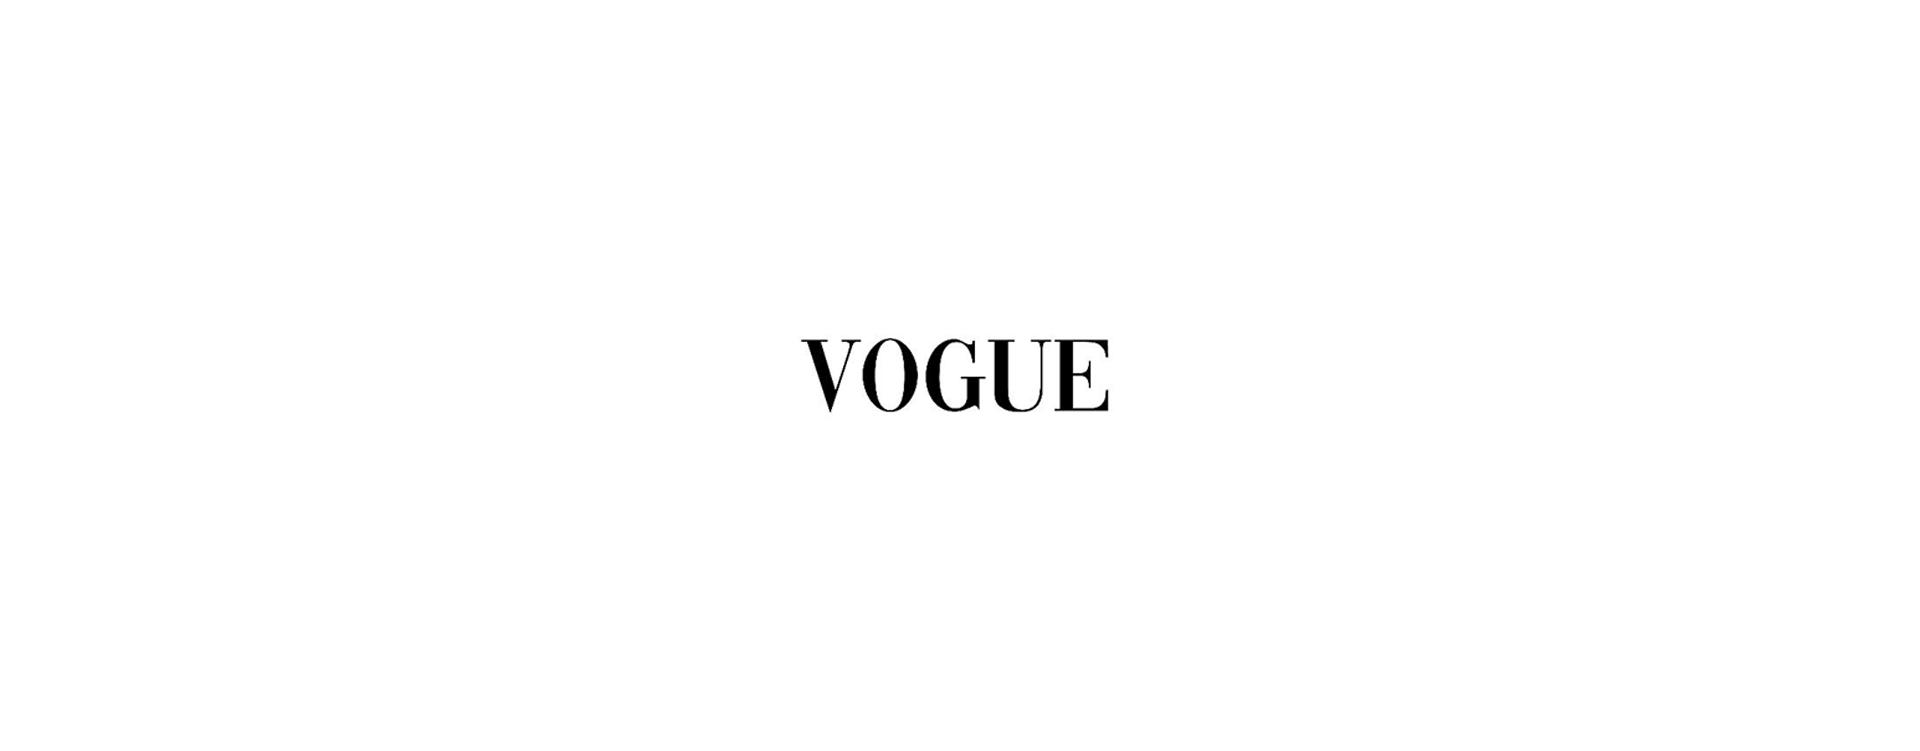 Vogue award